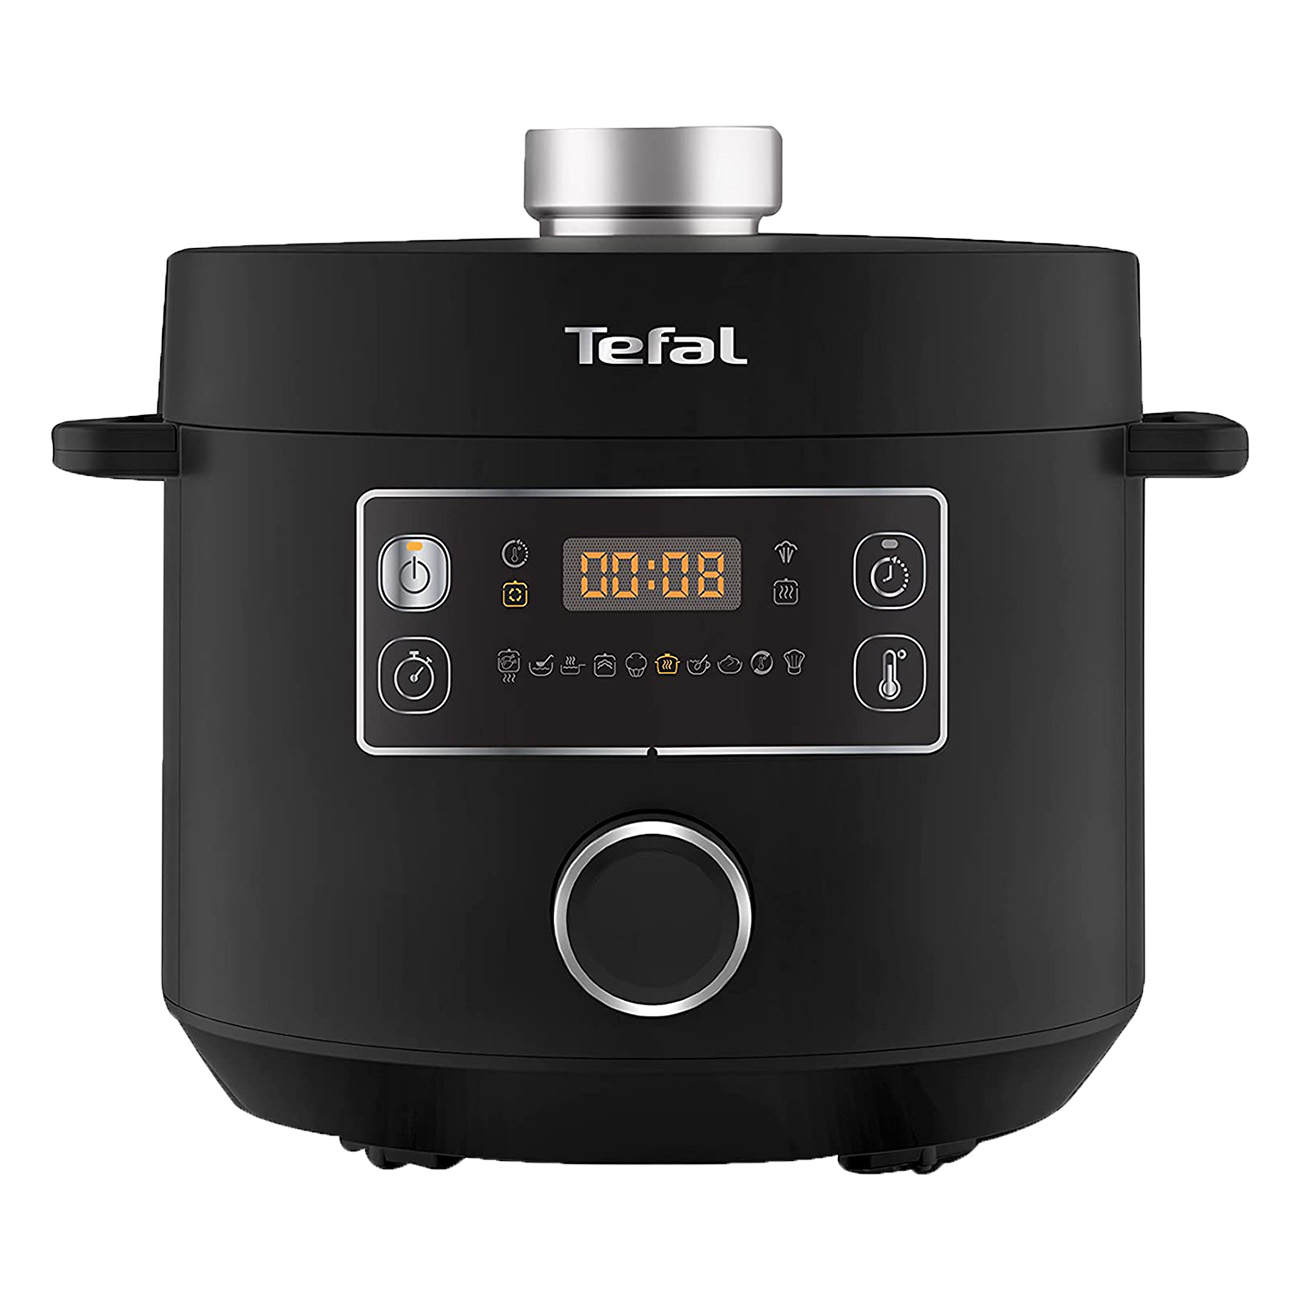 Tefal CY754830 TURBO CUISINE Aussteller | Schnellkochtopf | 5L Kapazit?t | 10 Kochprogramme | Automatisches Kochen | Verz?gerte Start Funktion | Inklusive Rezeptheft von Tefal